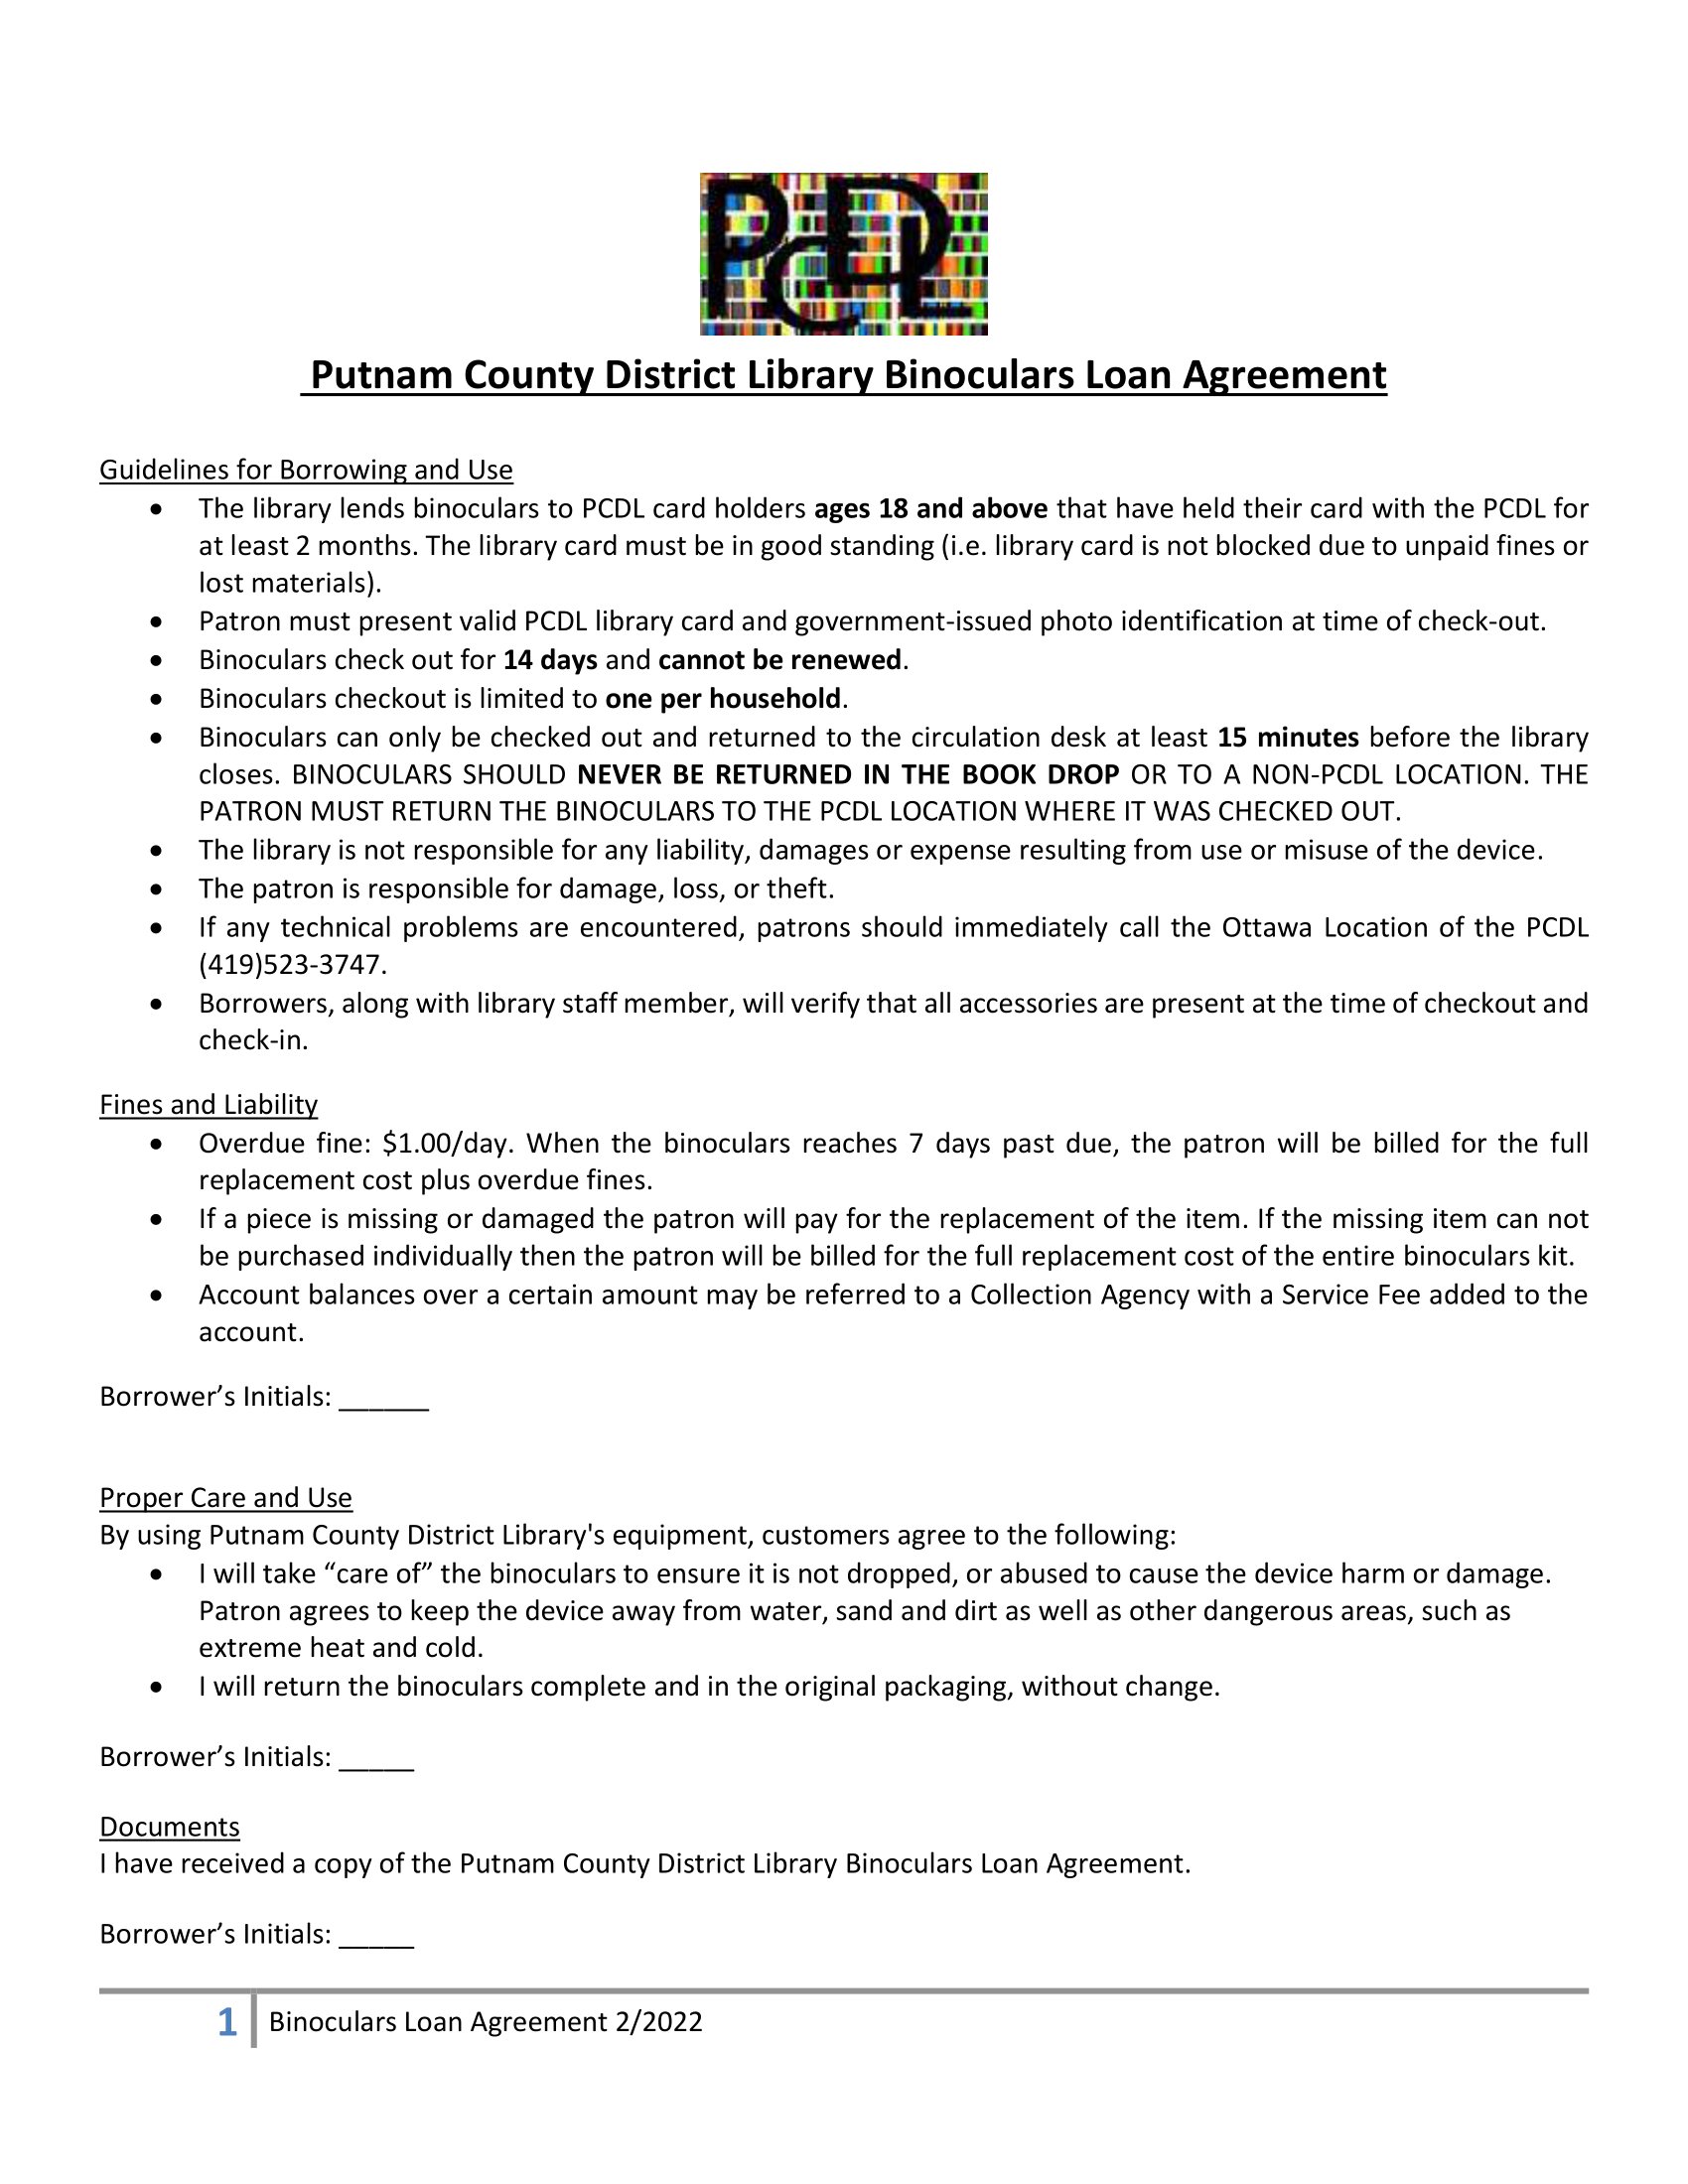 Binocular Loan Agreement page 1